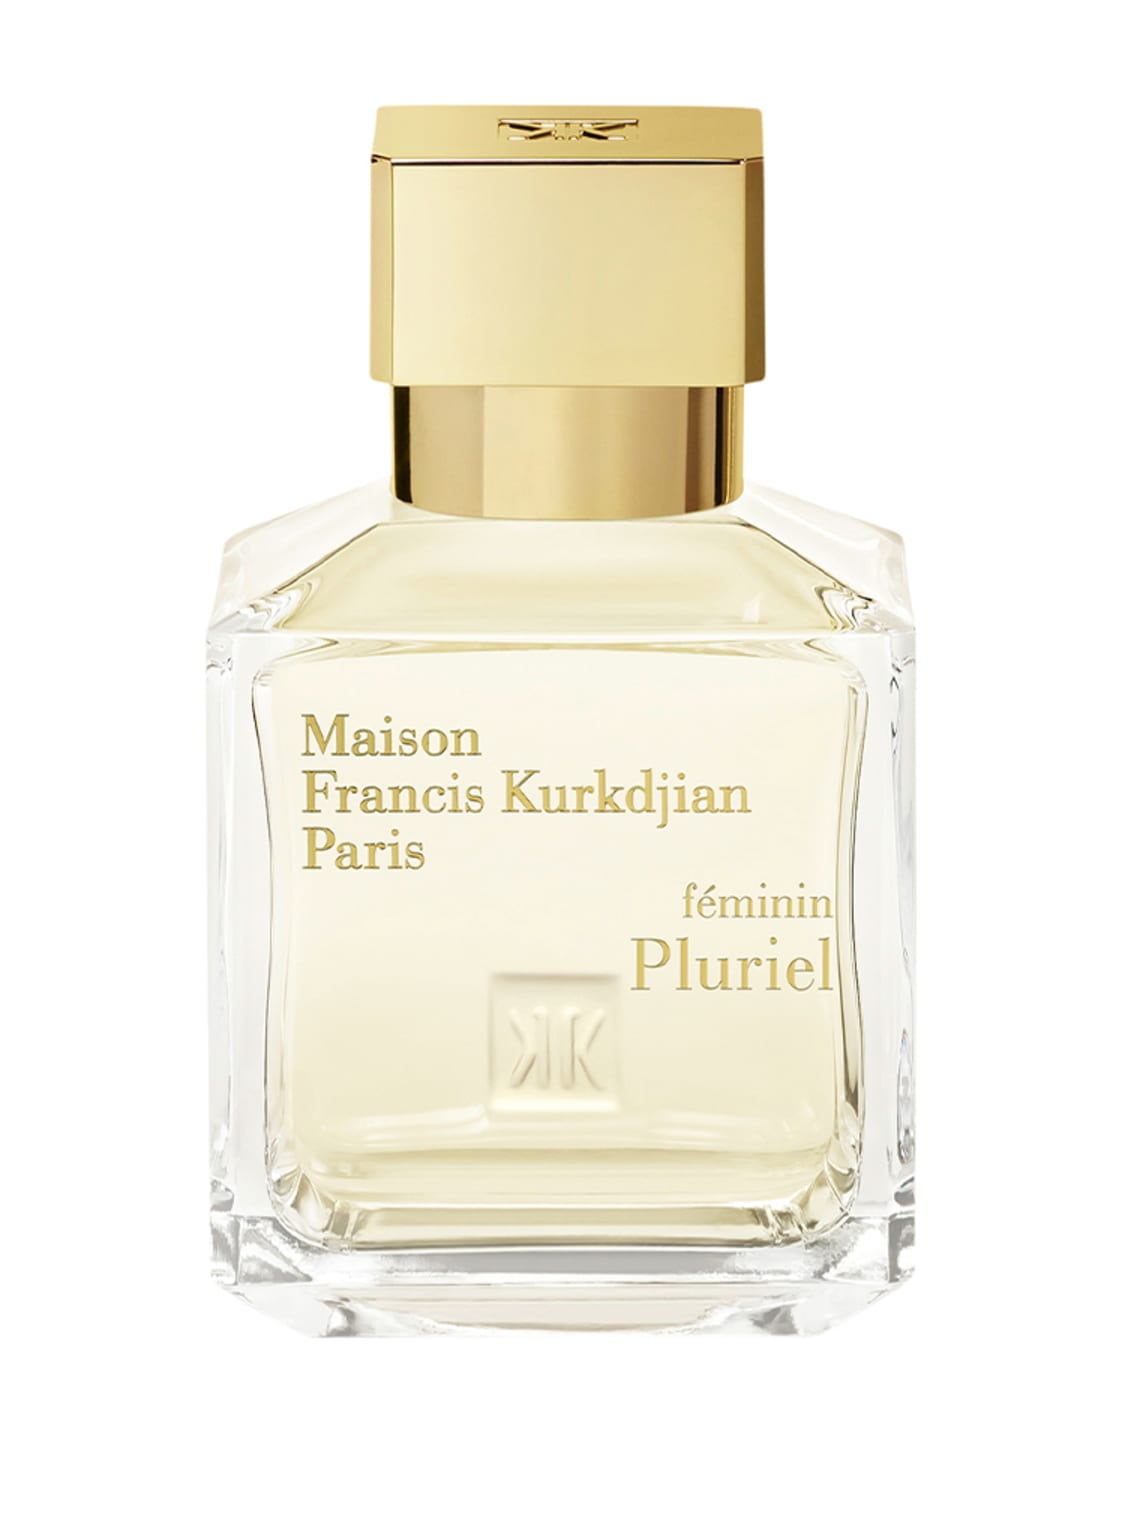 Maison Francis Kurkdjian Paris Féminin Pluriel Eau de Parfum 70 ml von Maison Francis Kurkdjian Paris